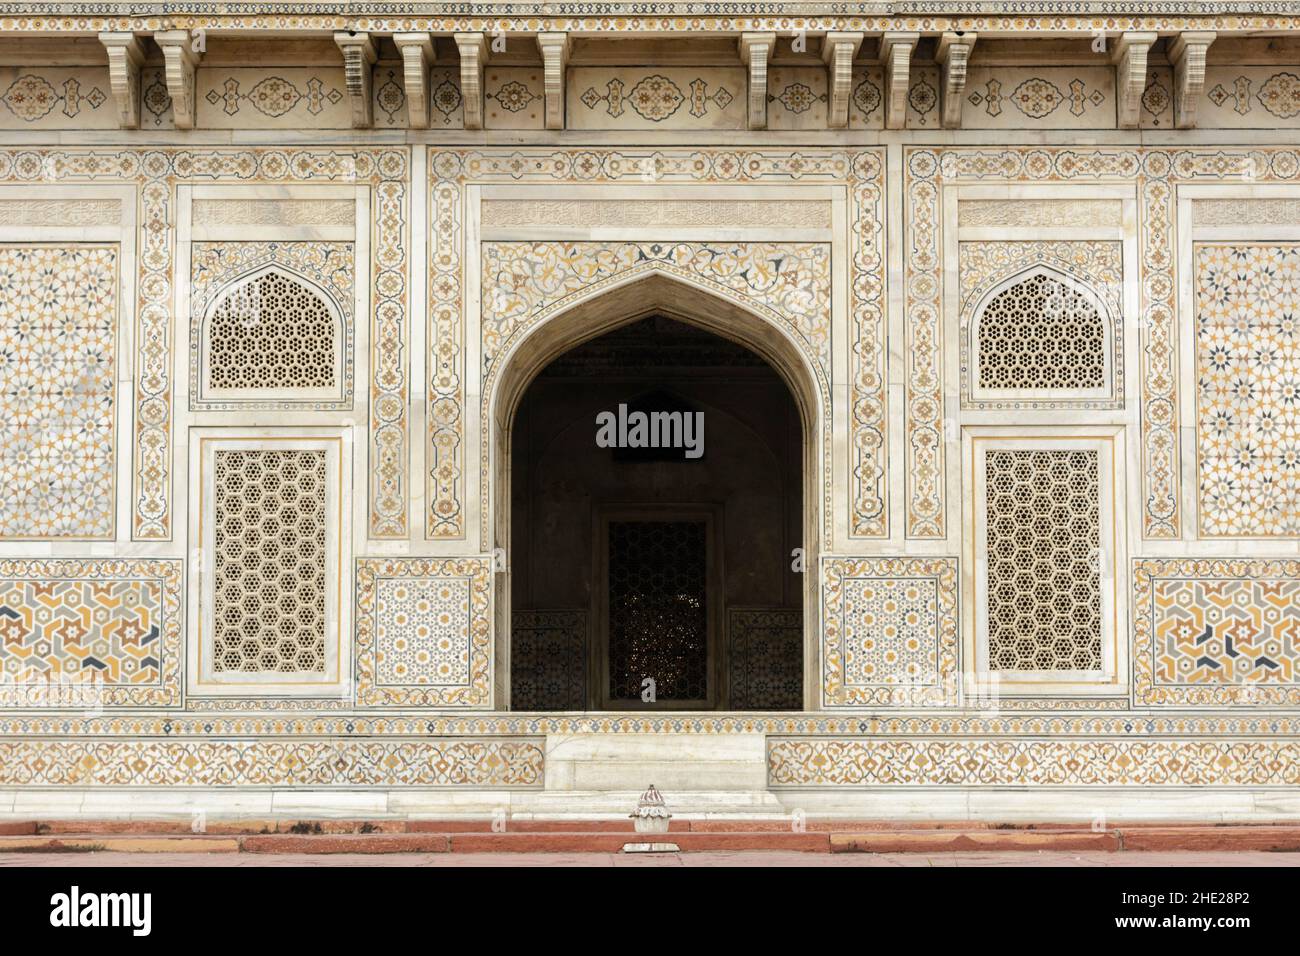 Tomb of Itmad-Ud-Daulah or Etimad-ud-Daulah made from white marble, Agra, Uttar Pradesh, India, South Asia. Also known as the Baby Taj or Mini Taj. Stock Photo